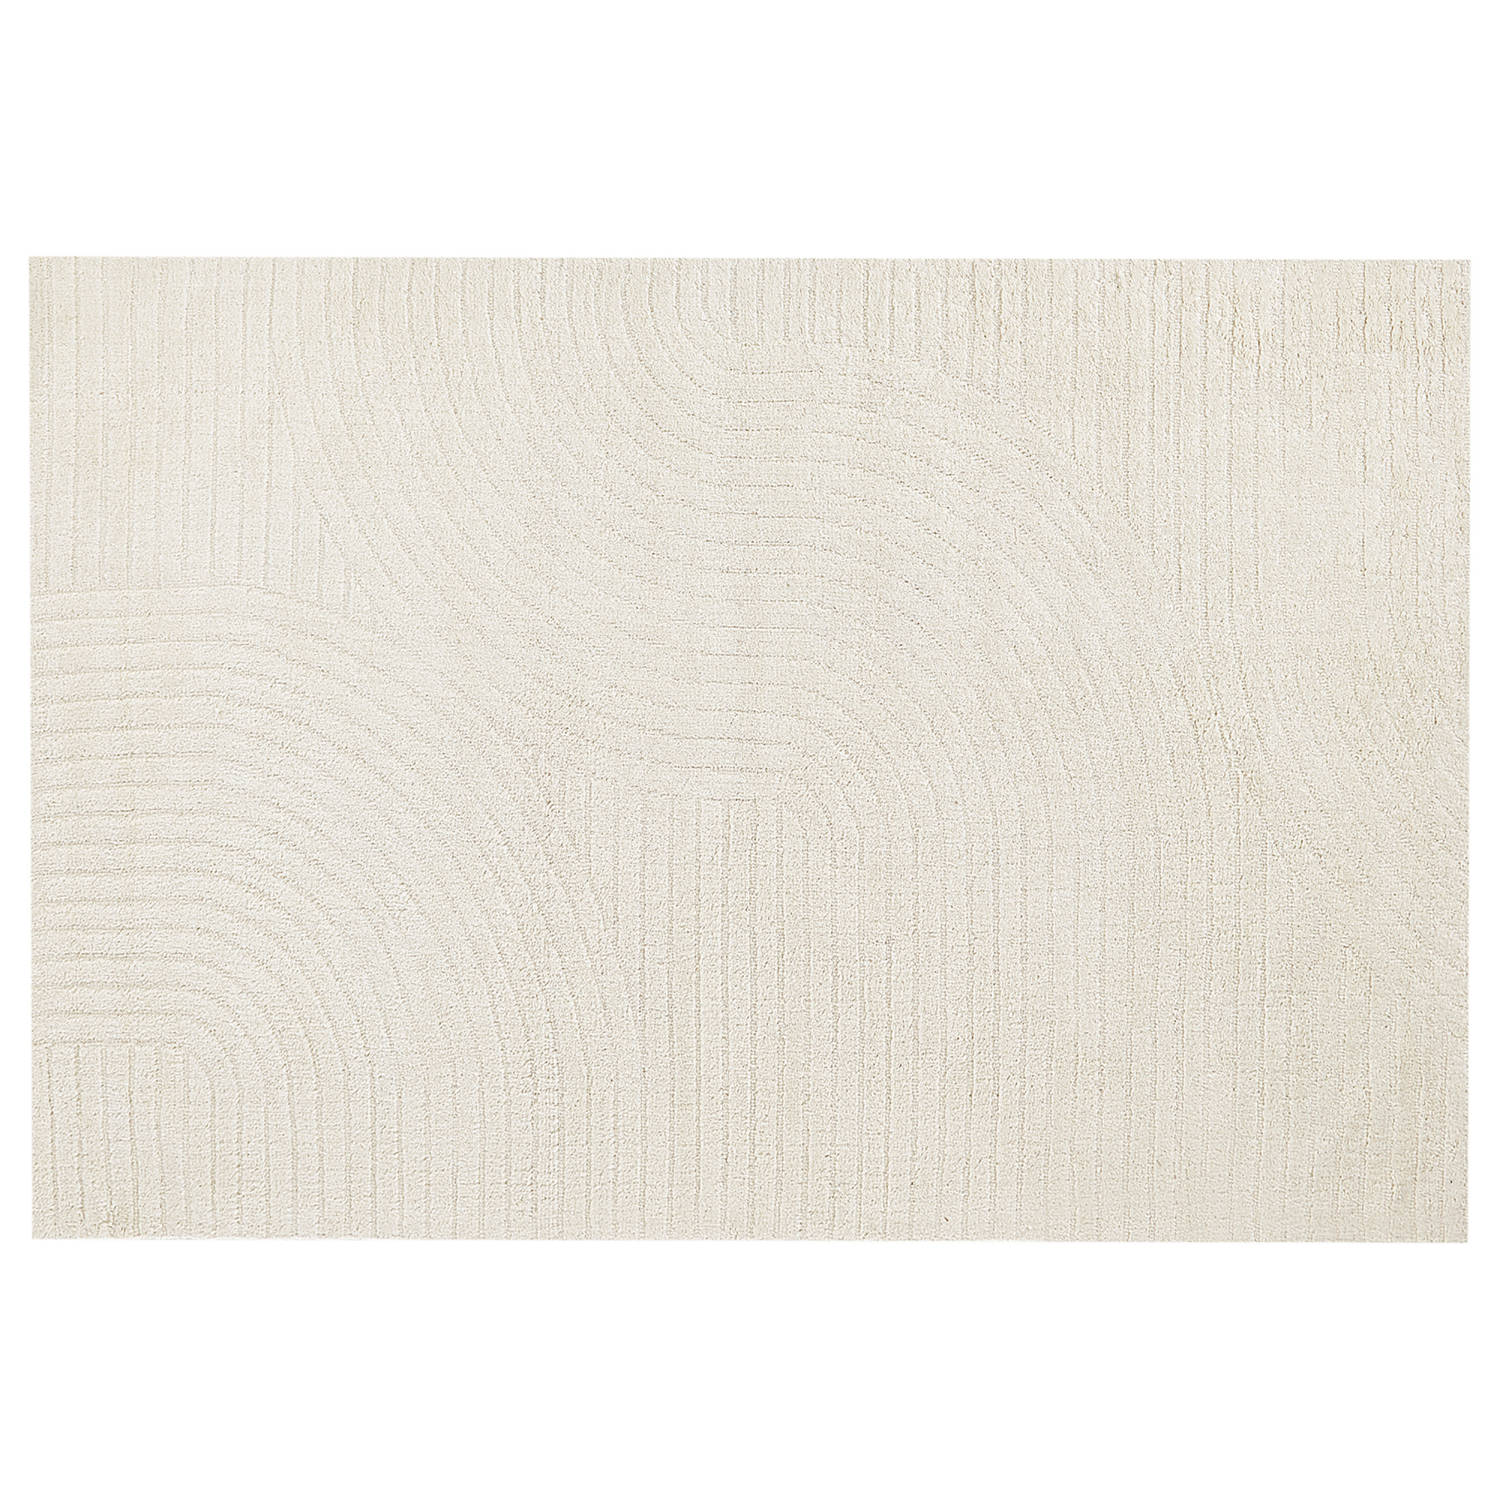 DAGARI - Vloerkleed - Beige - 160 x 230 cm - Wol